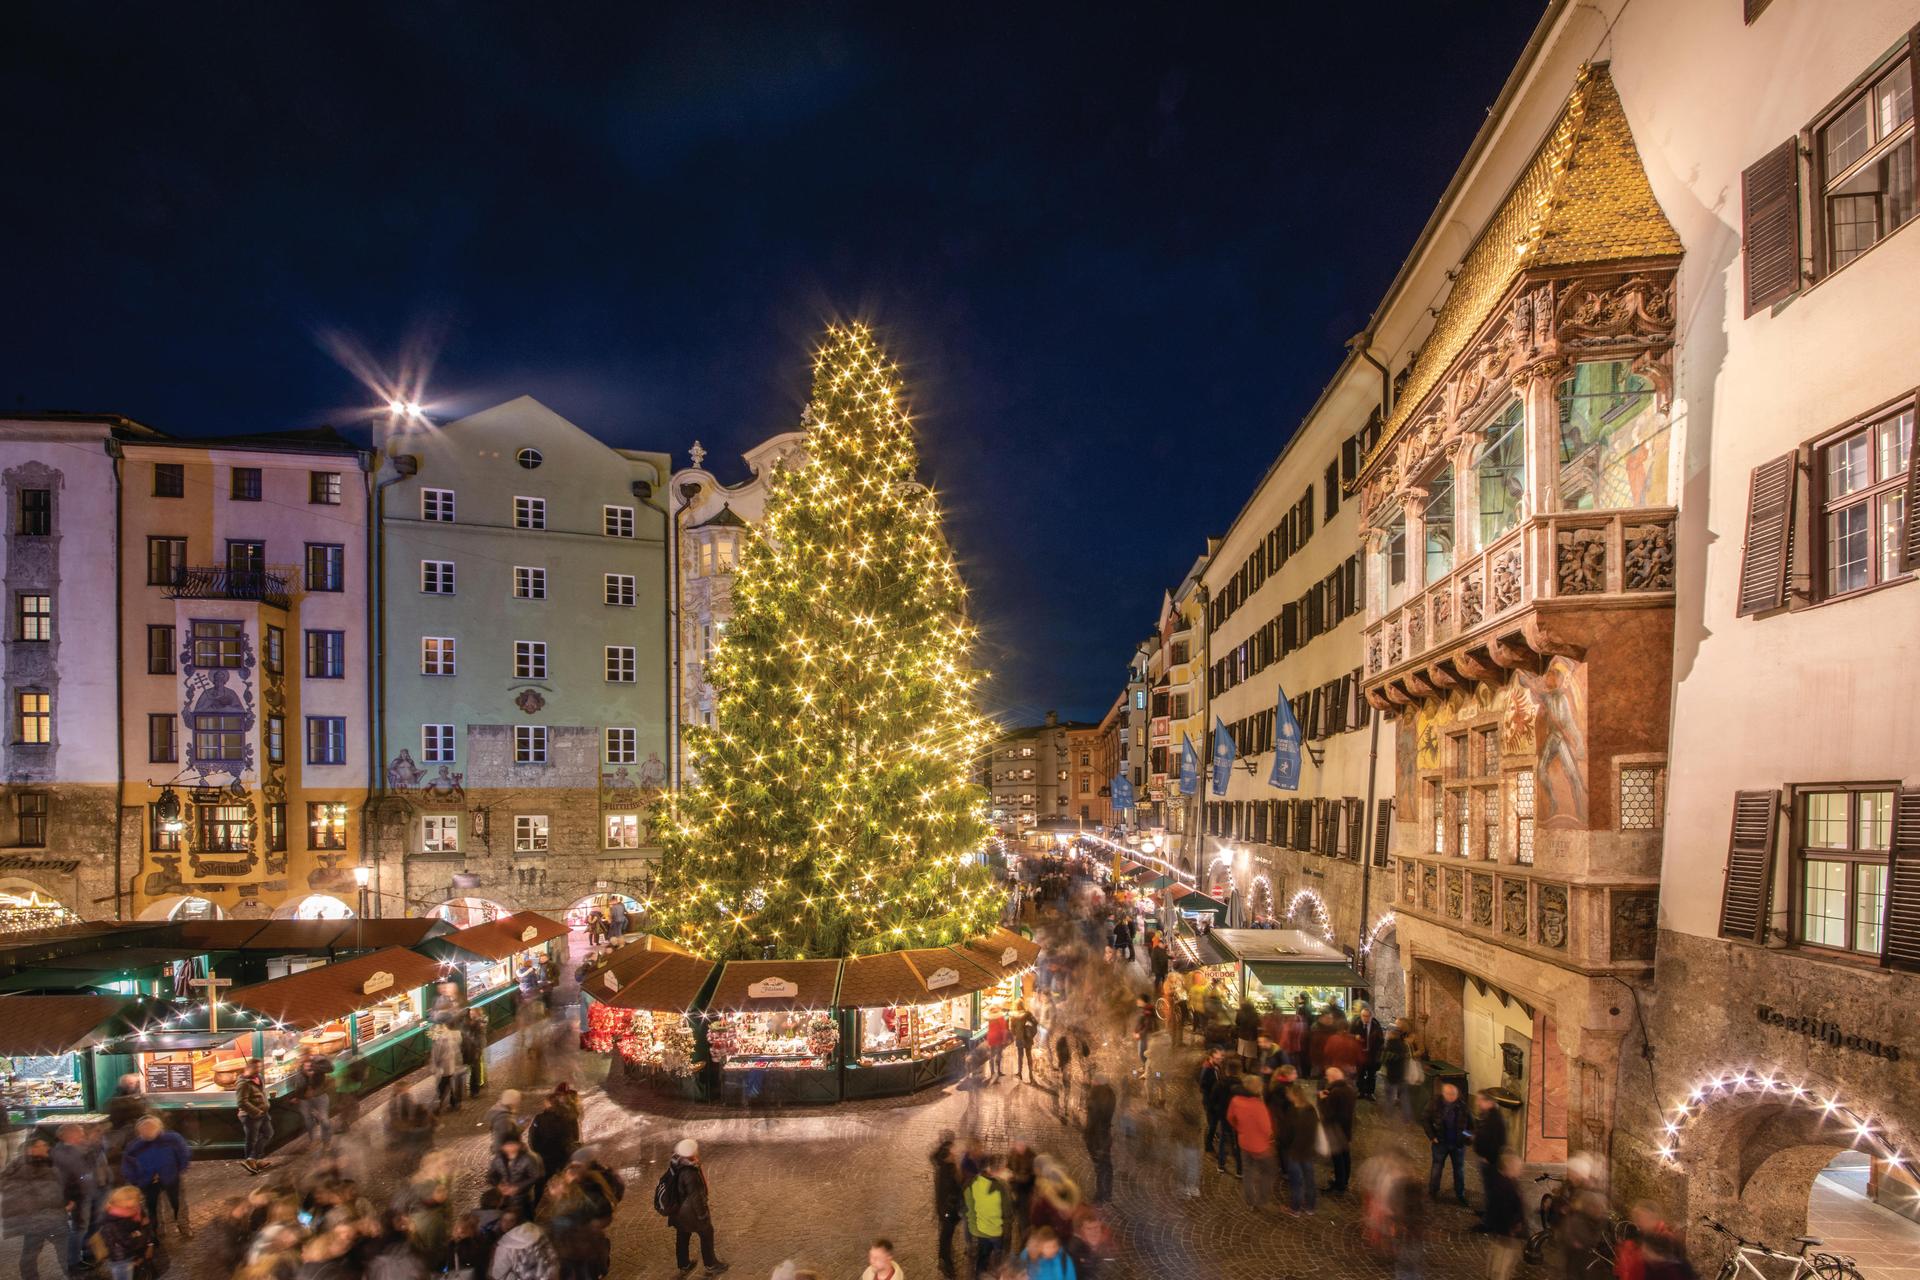 Innsbruck Tourismus kerst in innsbruck kerstboom